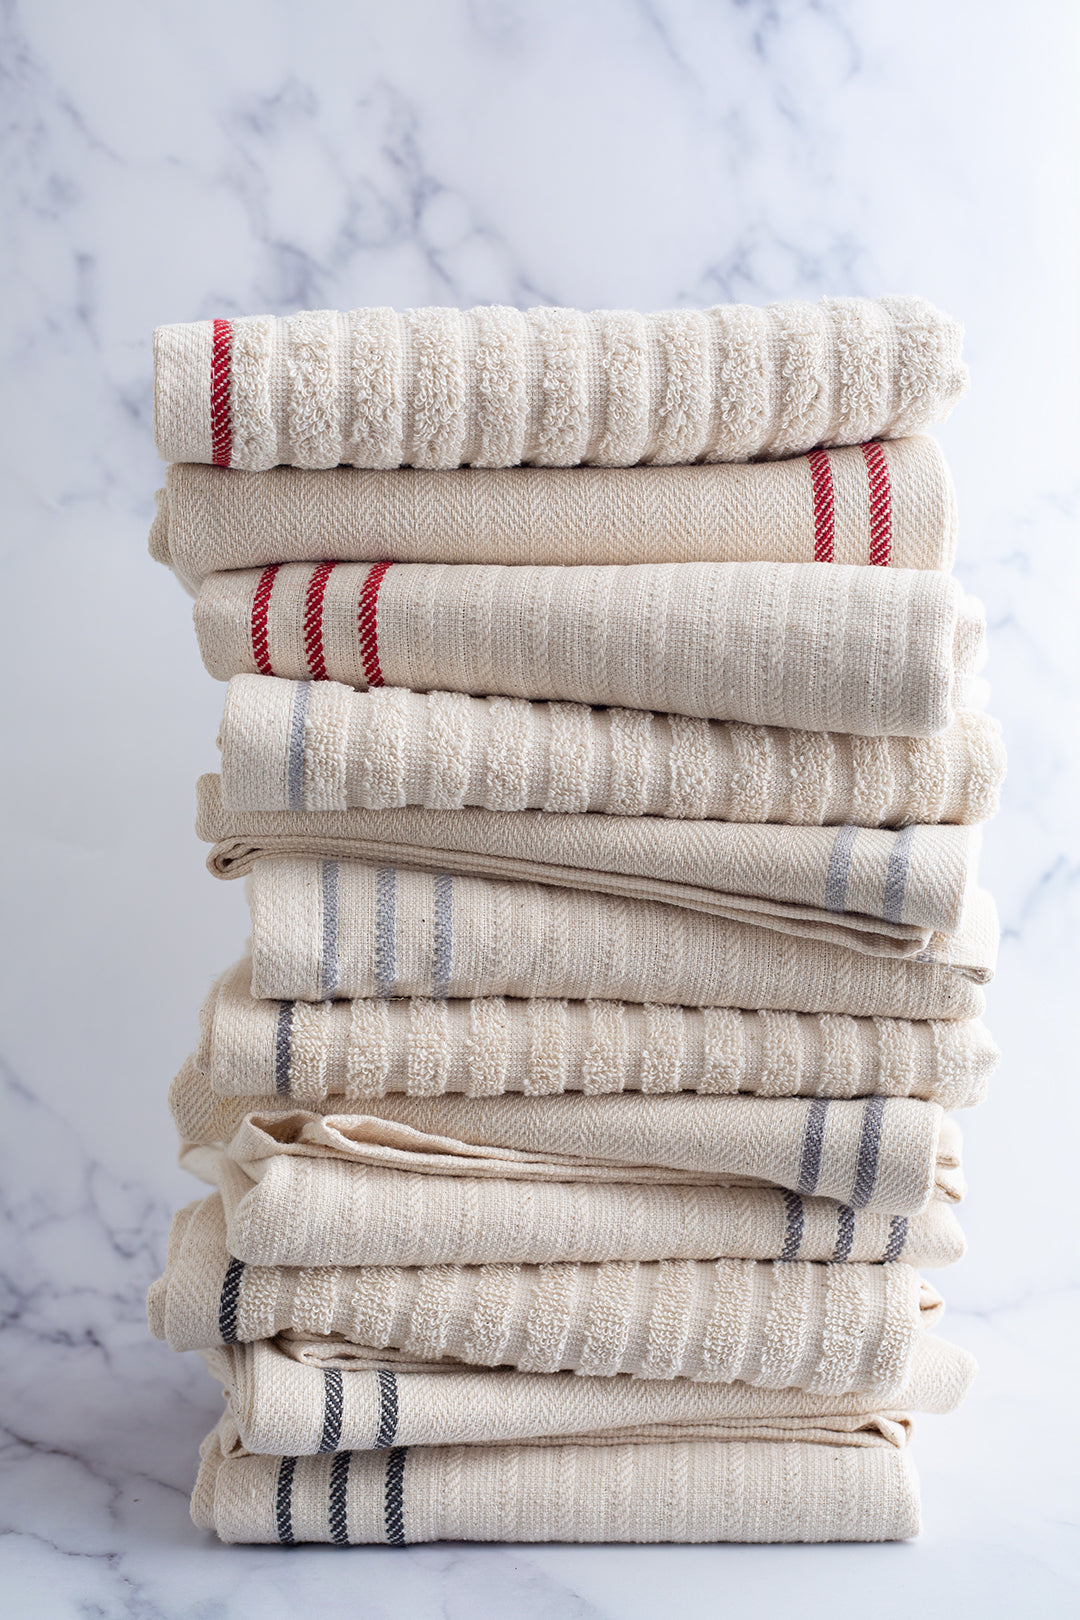 Sage & Oregano Linen Kitchen Towels (set of 2)